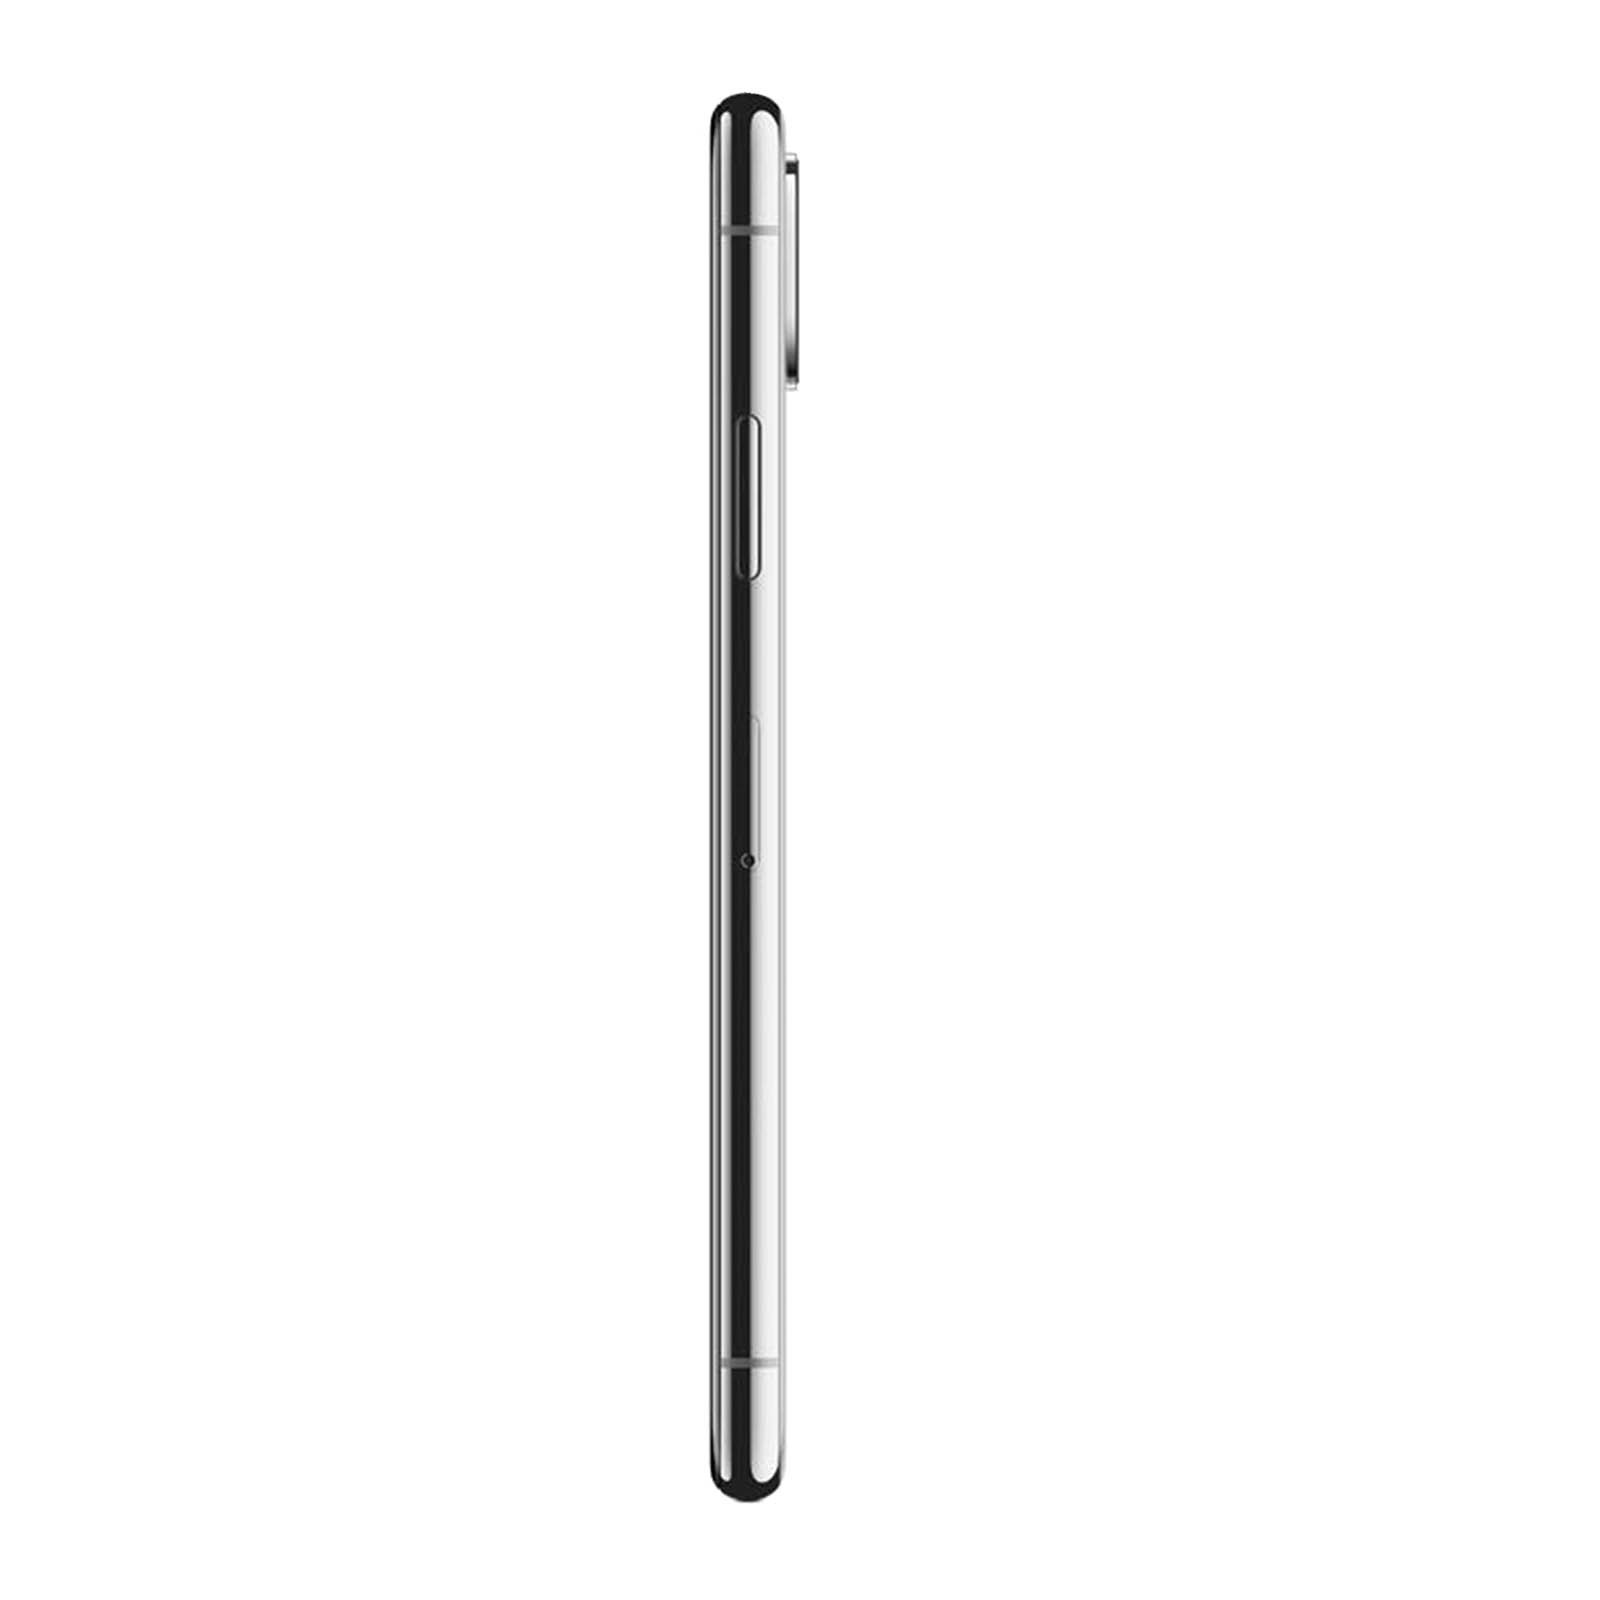 Apple iPhone XS Max 512GB Space Grey Fair - Unlocked